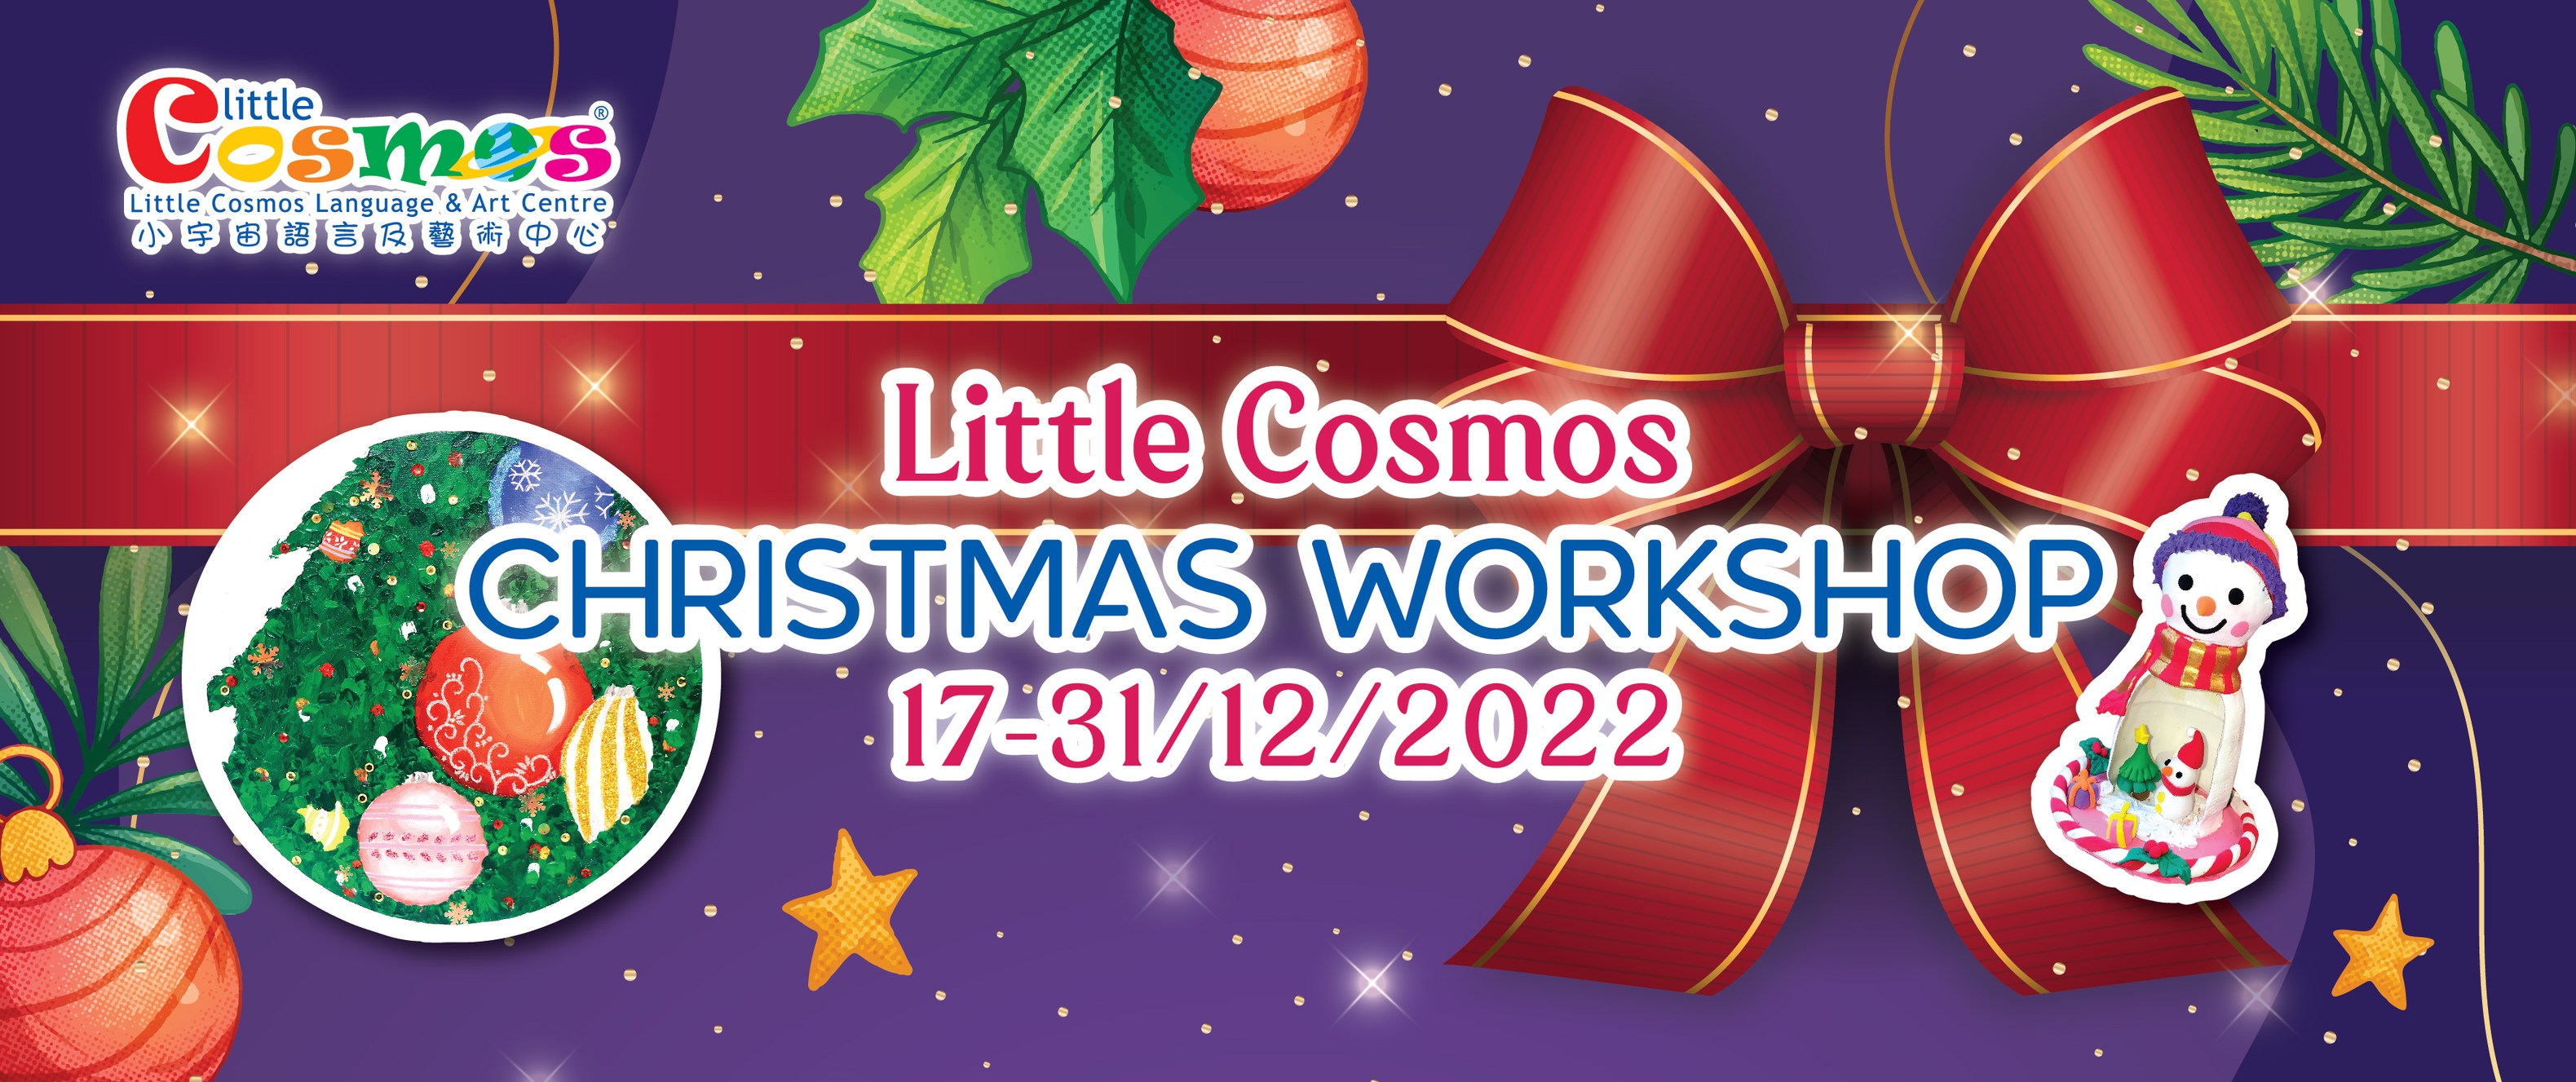 【20221215】Little Cosmos Christmas Workshop 2022 